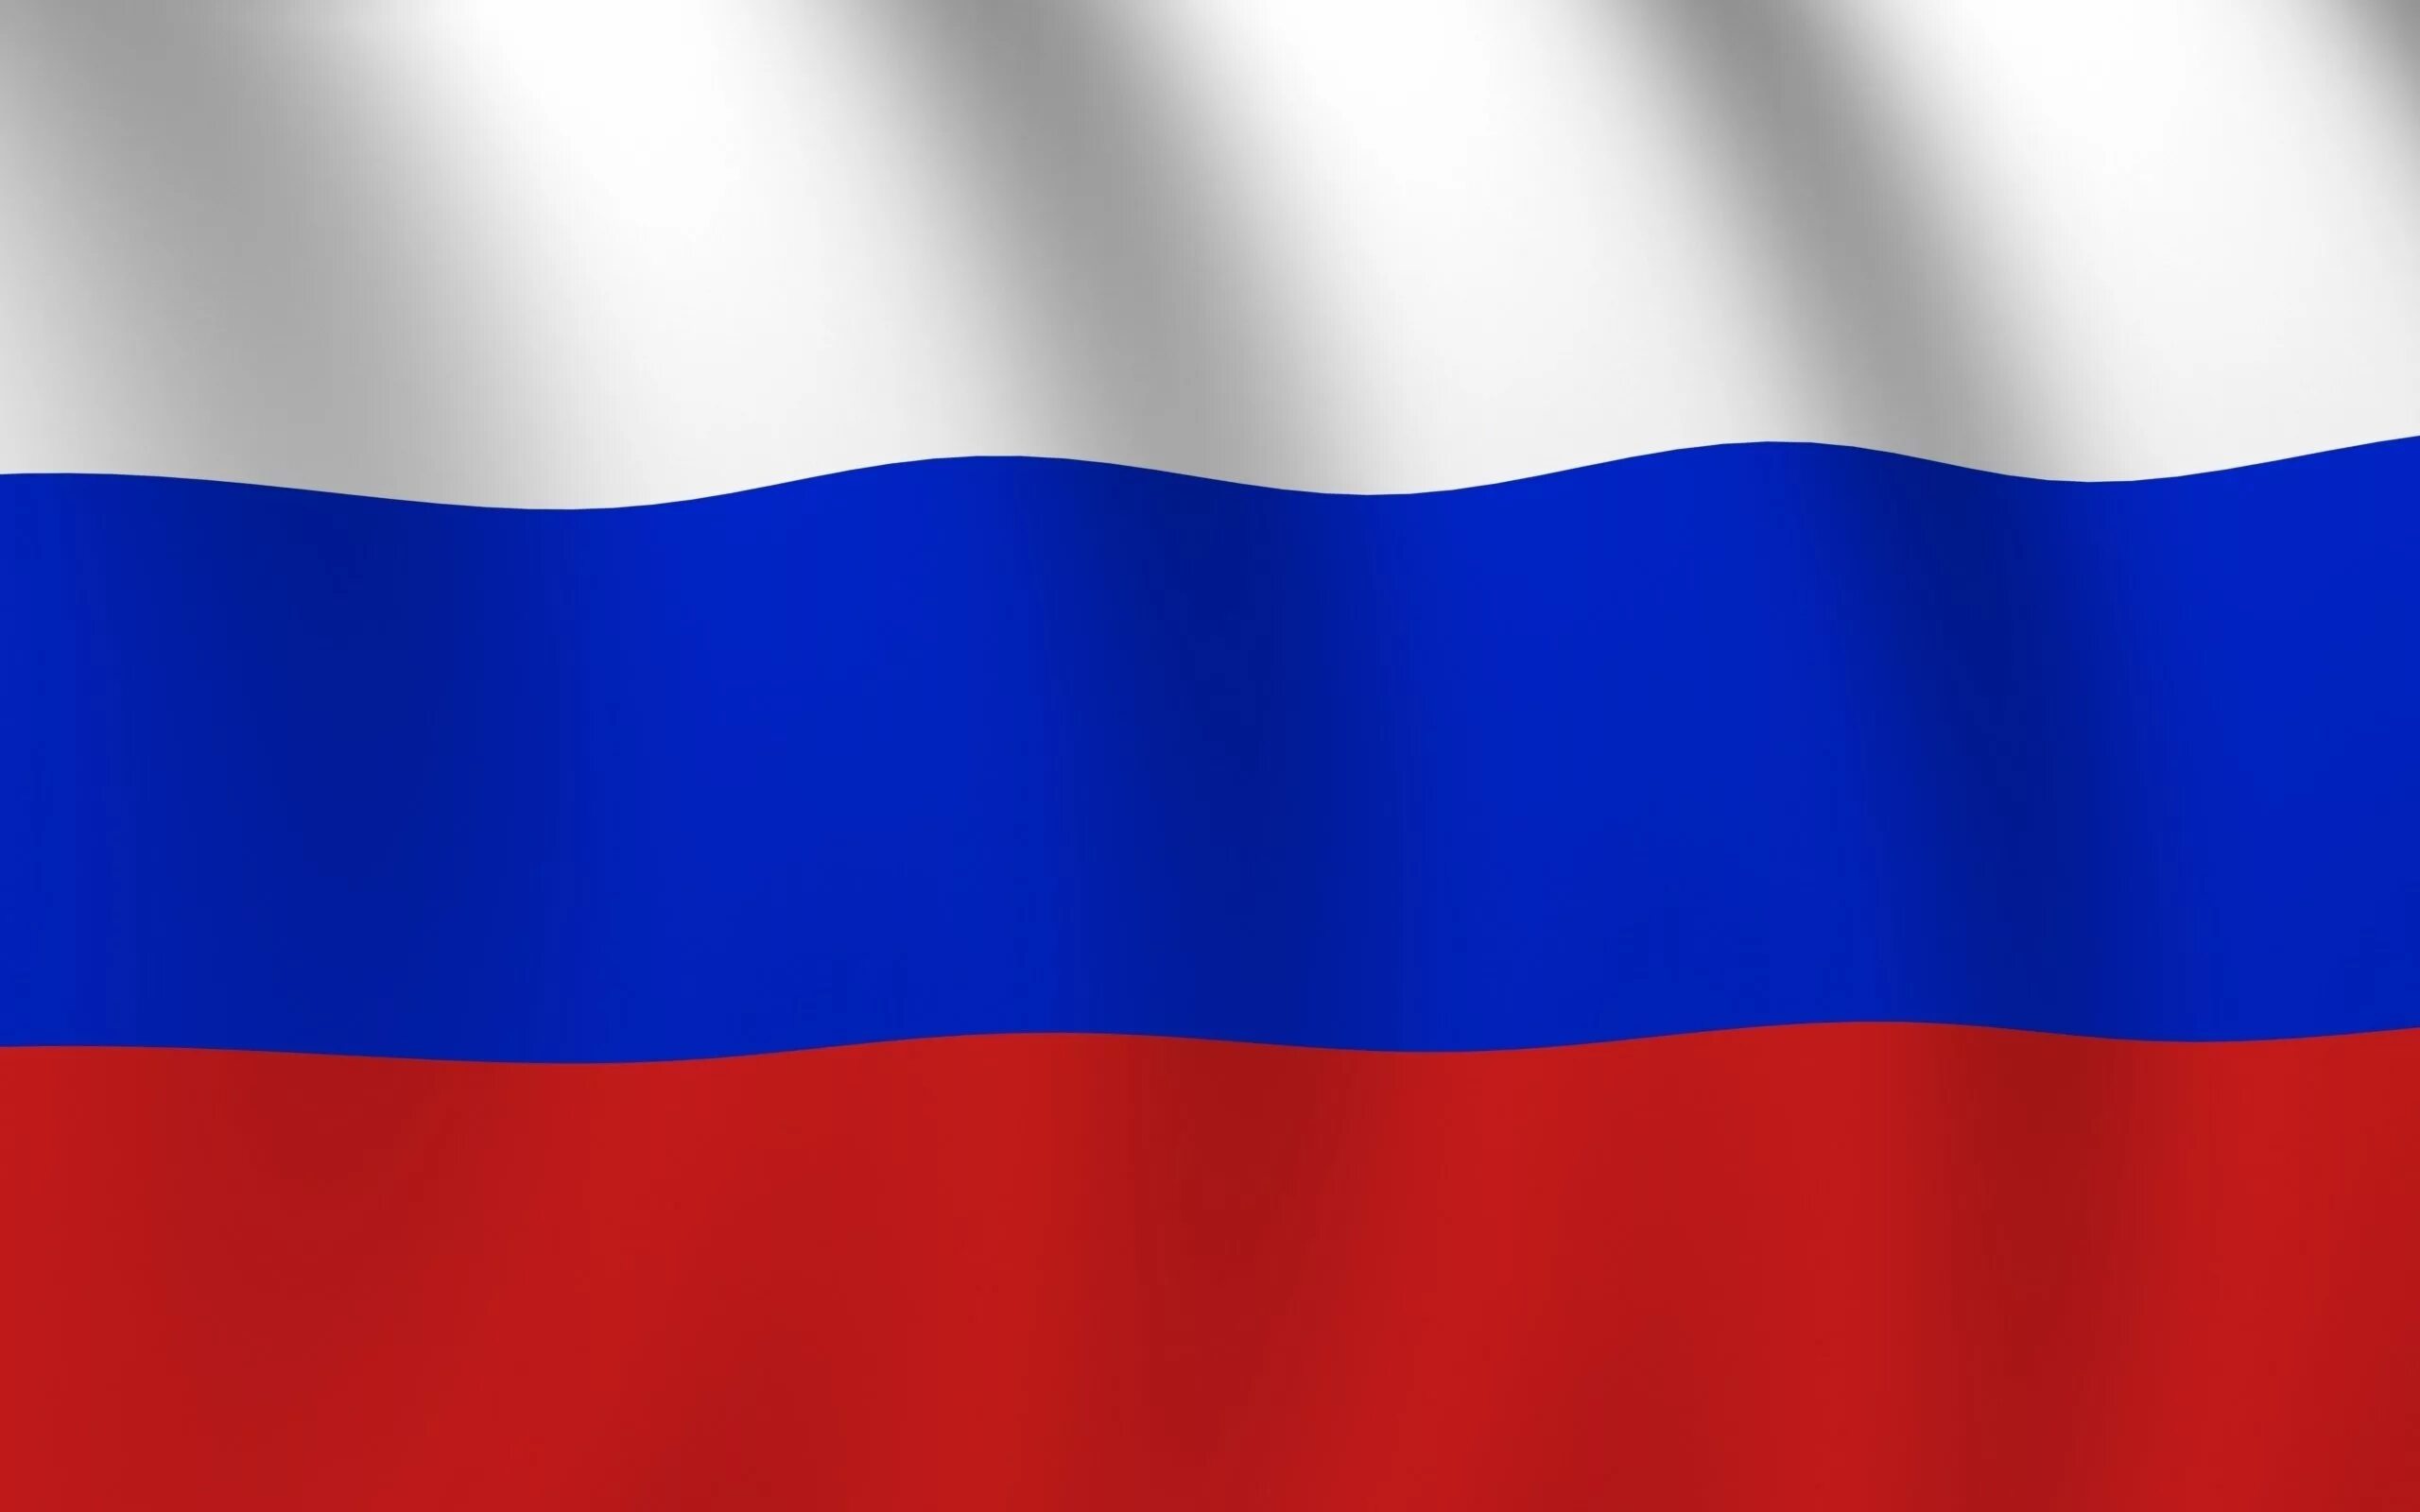 Флаг проси. Ф̆̈л̆̈ӑ̈г̆̈ р̆̈о̆̈с̆̈с̆̈й̈й̈. Флаг России. Флаг Триколор России. Флига России.